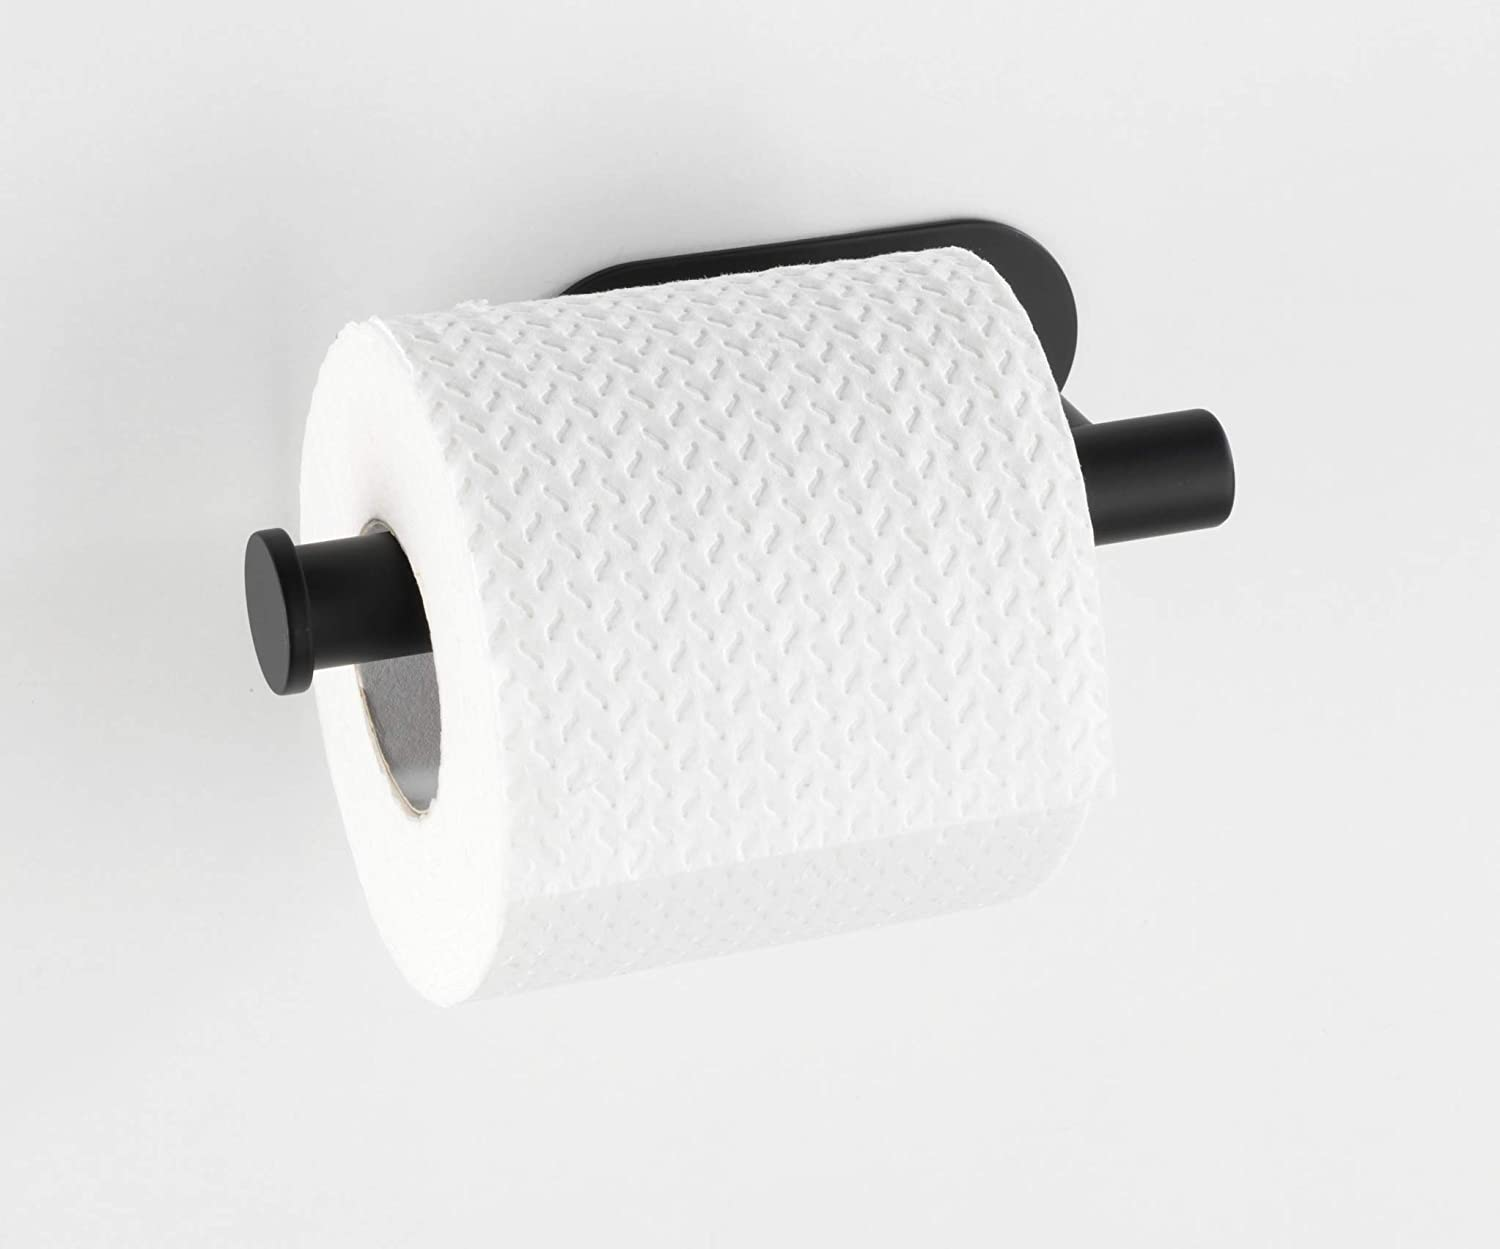 Turbo-Loc® Edelstahl Toilettenpapierhalter Orea Black Matt - WC-Rollenhalter, Befestigen ohne bohren, Edelstahl rostfrei, 16 x 4.5 x 7 cm, Schwarz